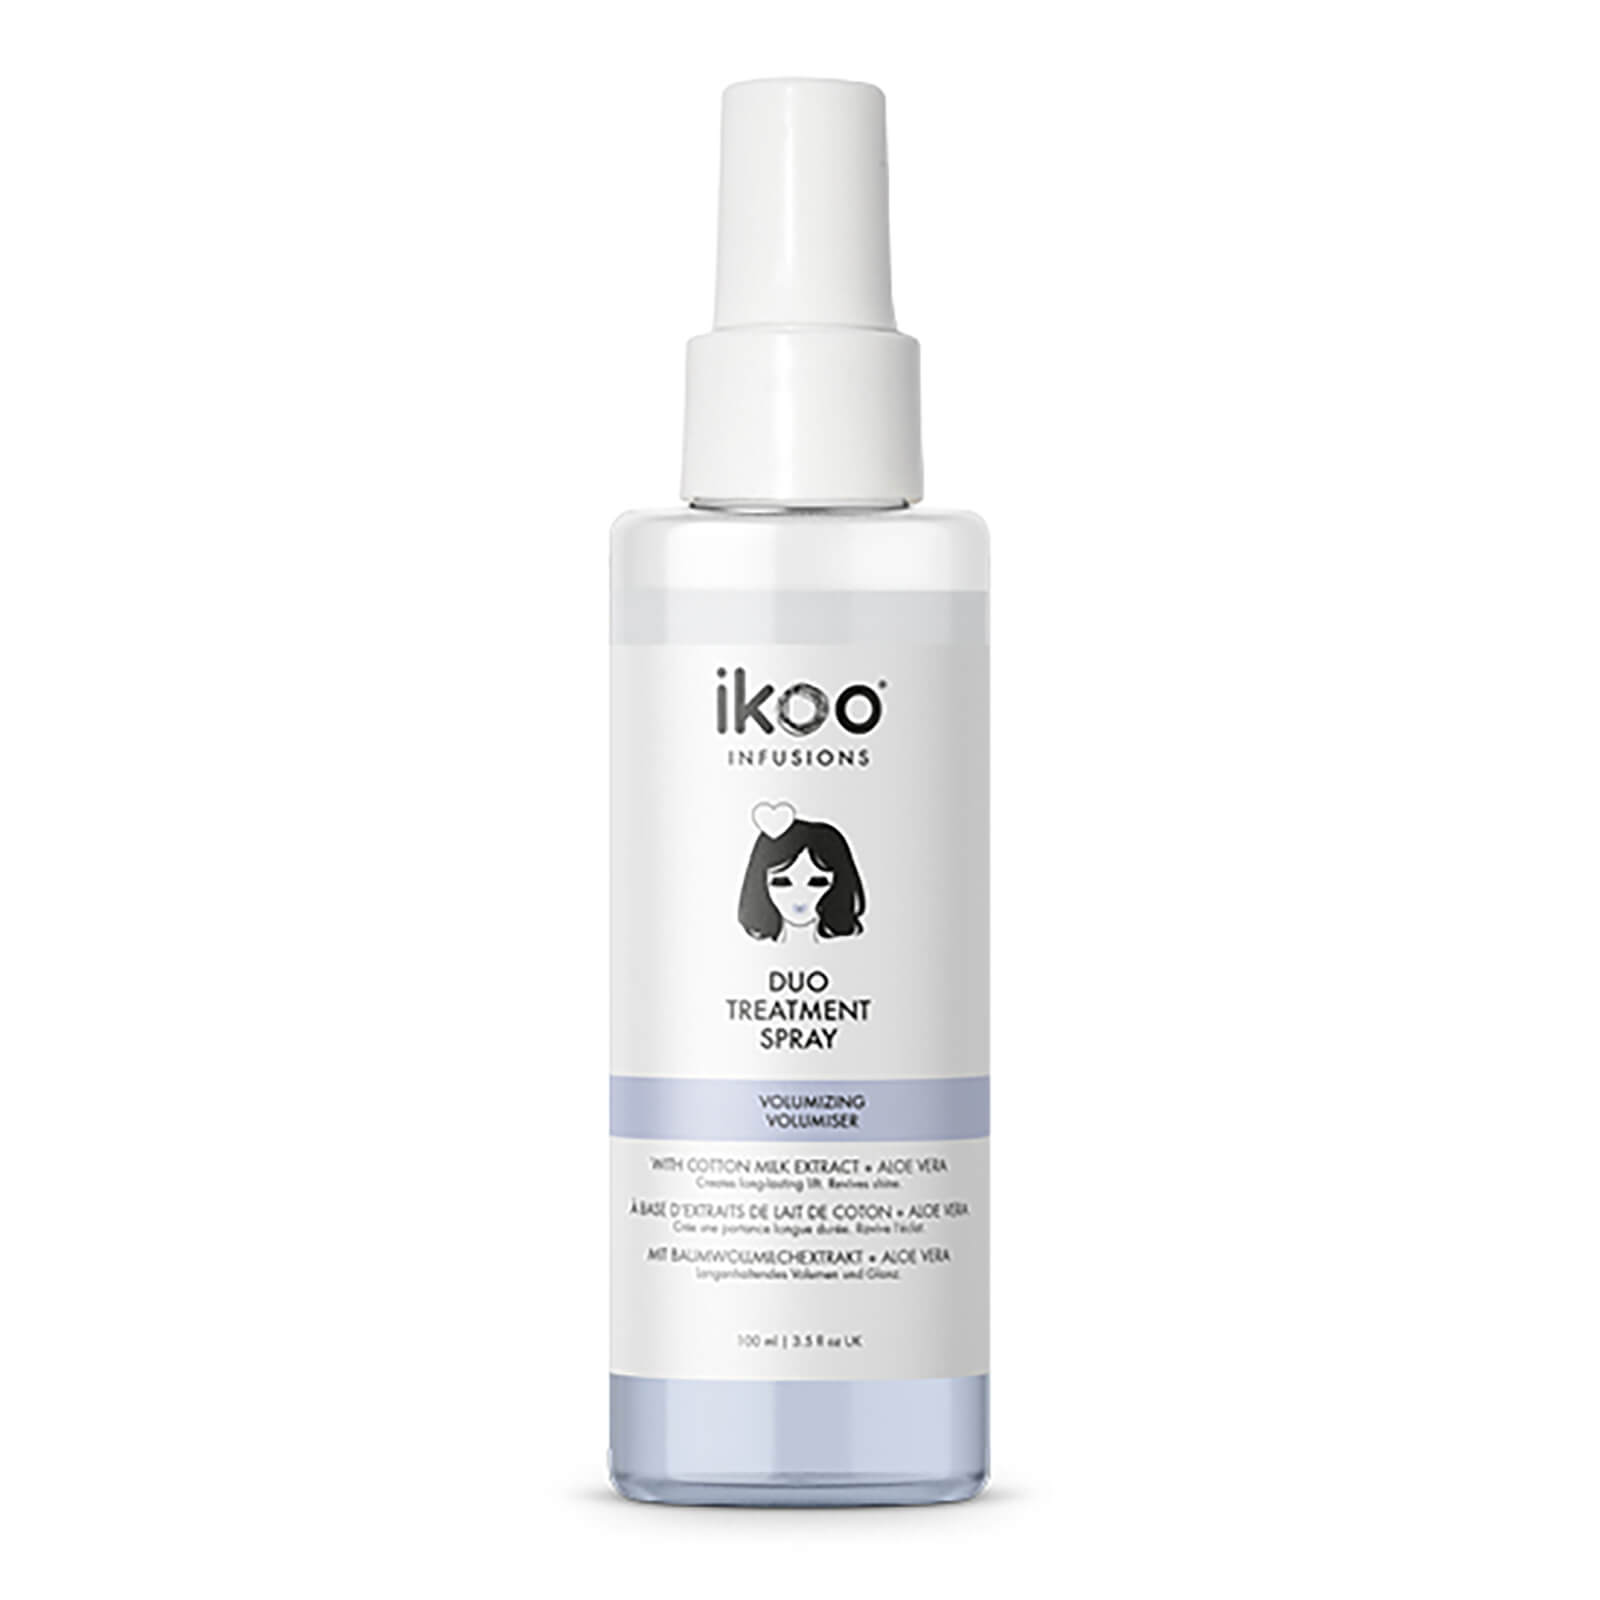 ikoo Volumizing DUO Treatment Spray (100ml) lookfantastic.com imagine